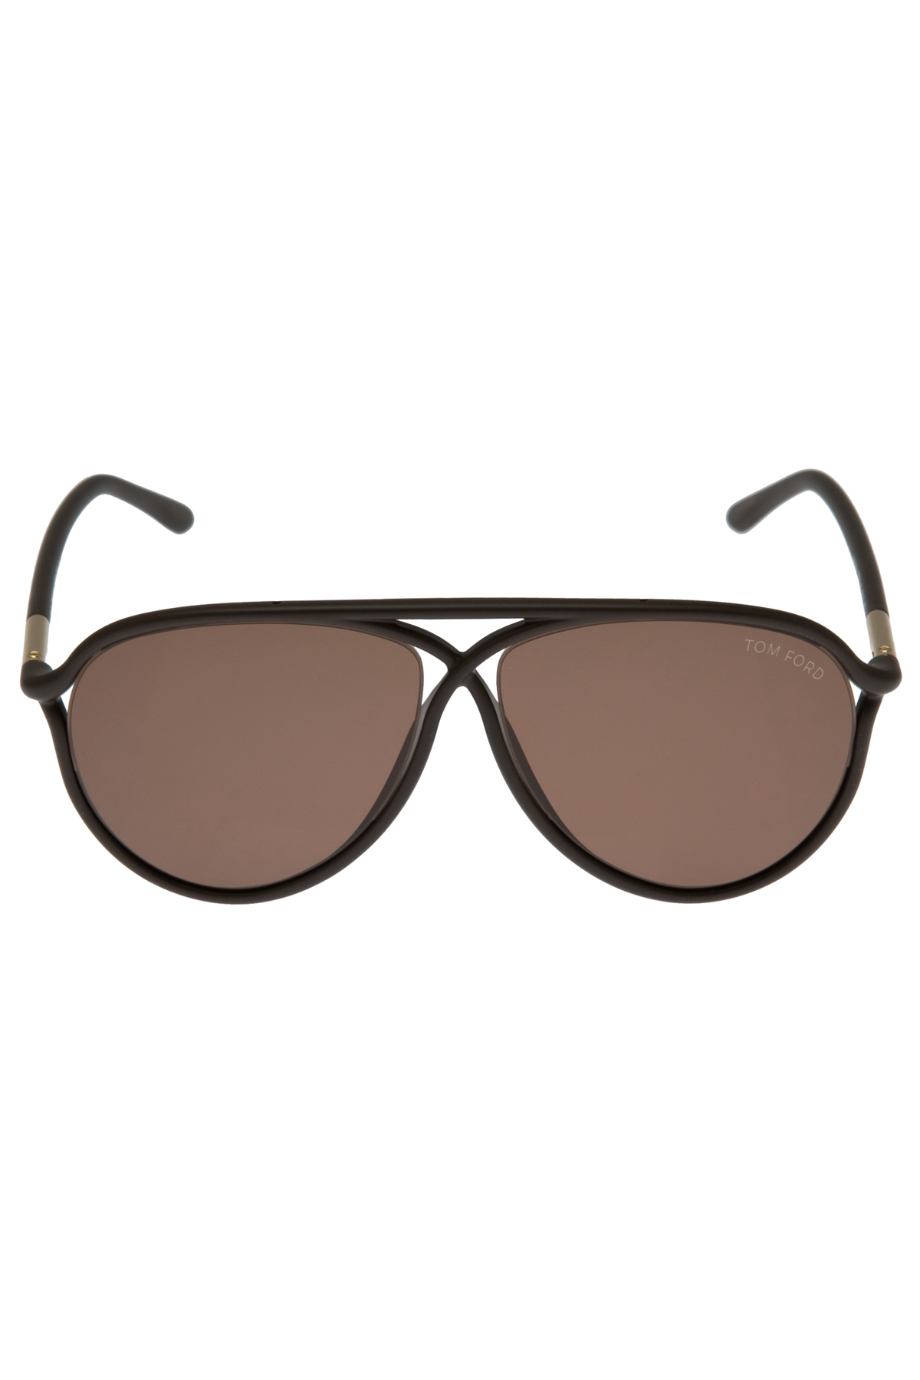 Lyst - Tom ford Maximillion Aviator Sunglasses in Brown